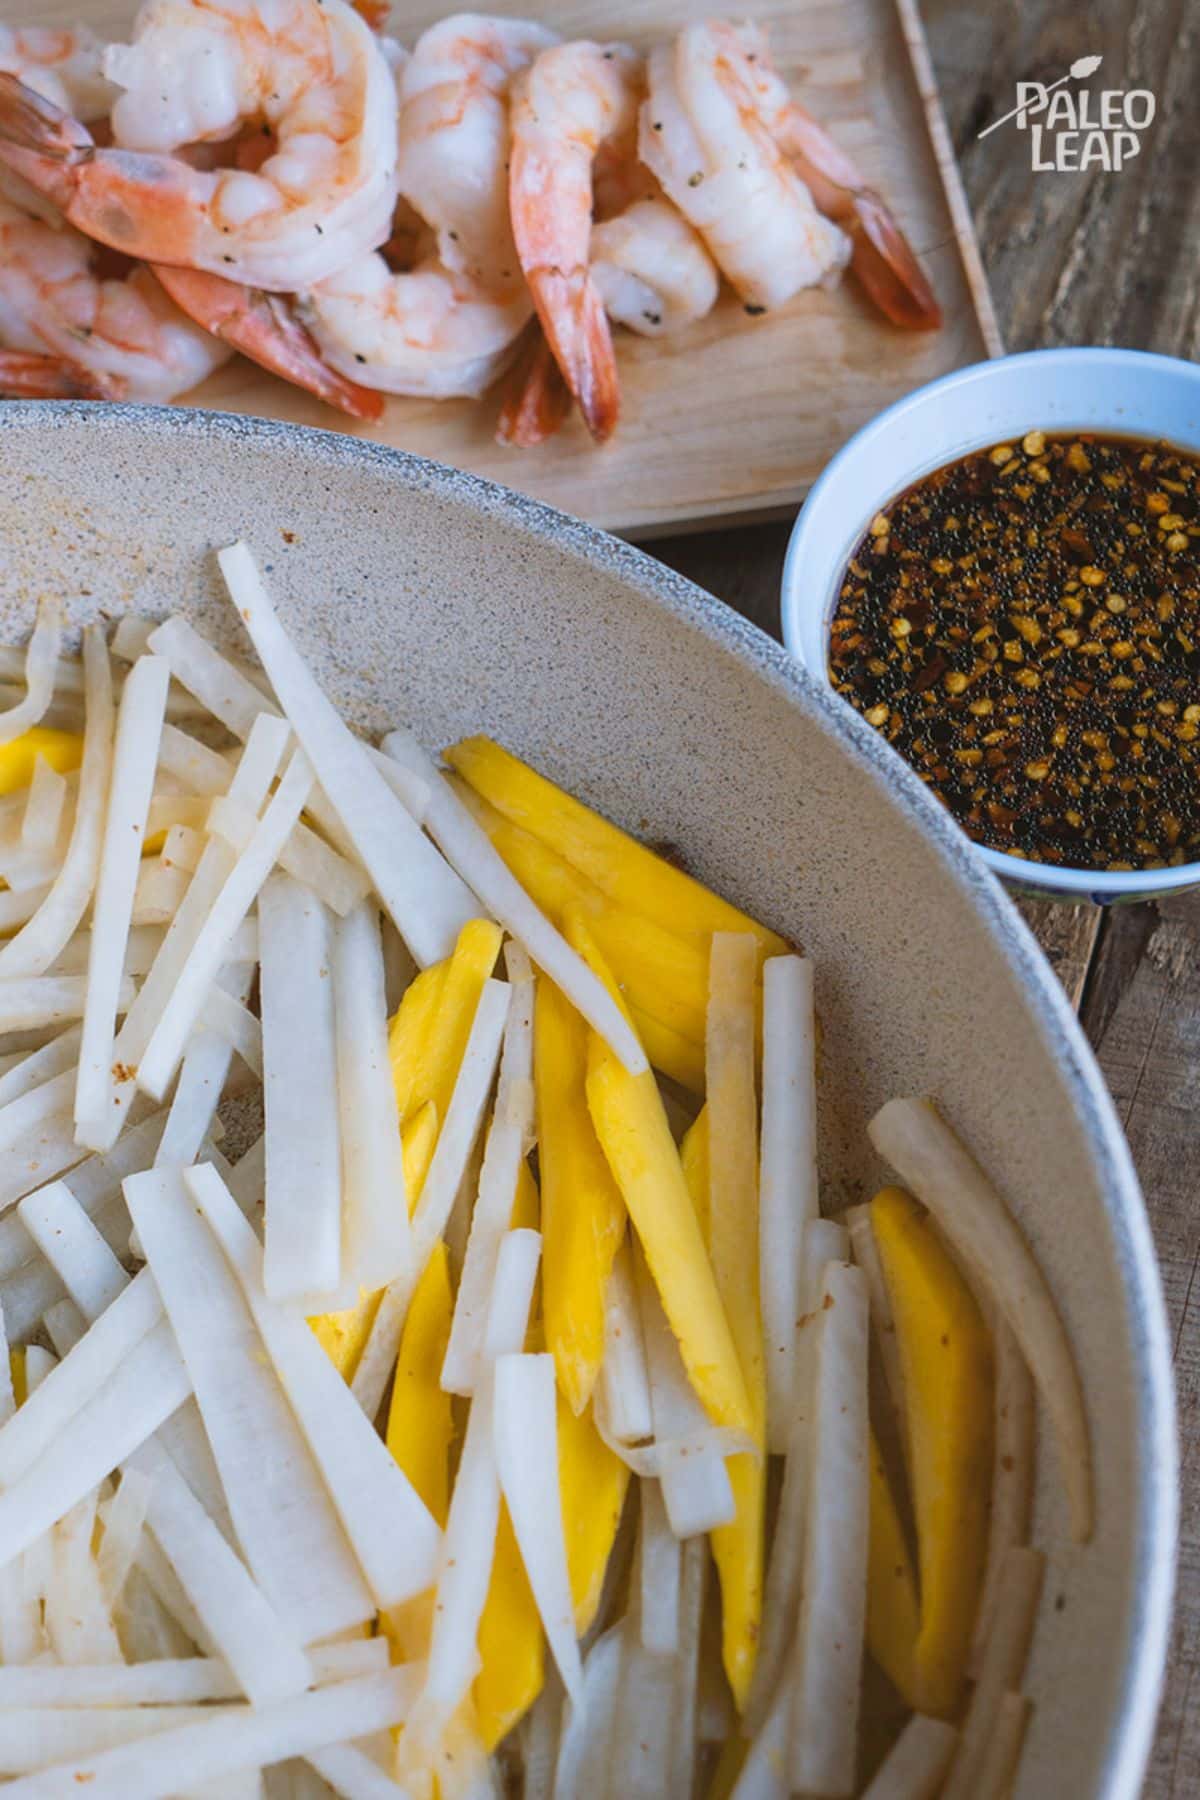 Paleo Hoisin Shrimp And Mango preparation.